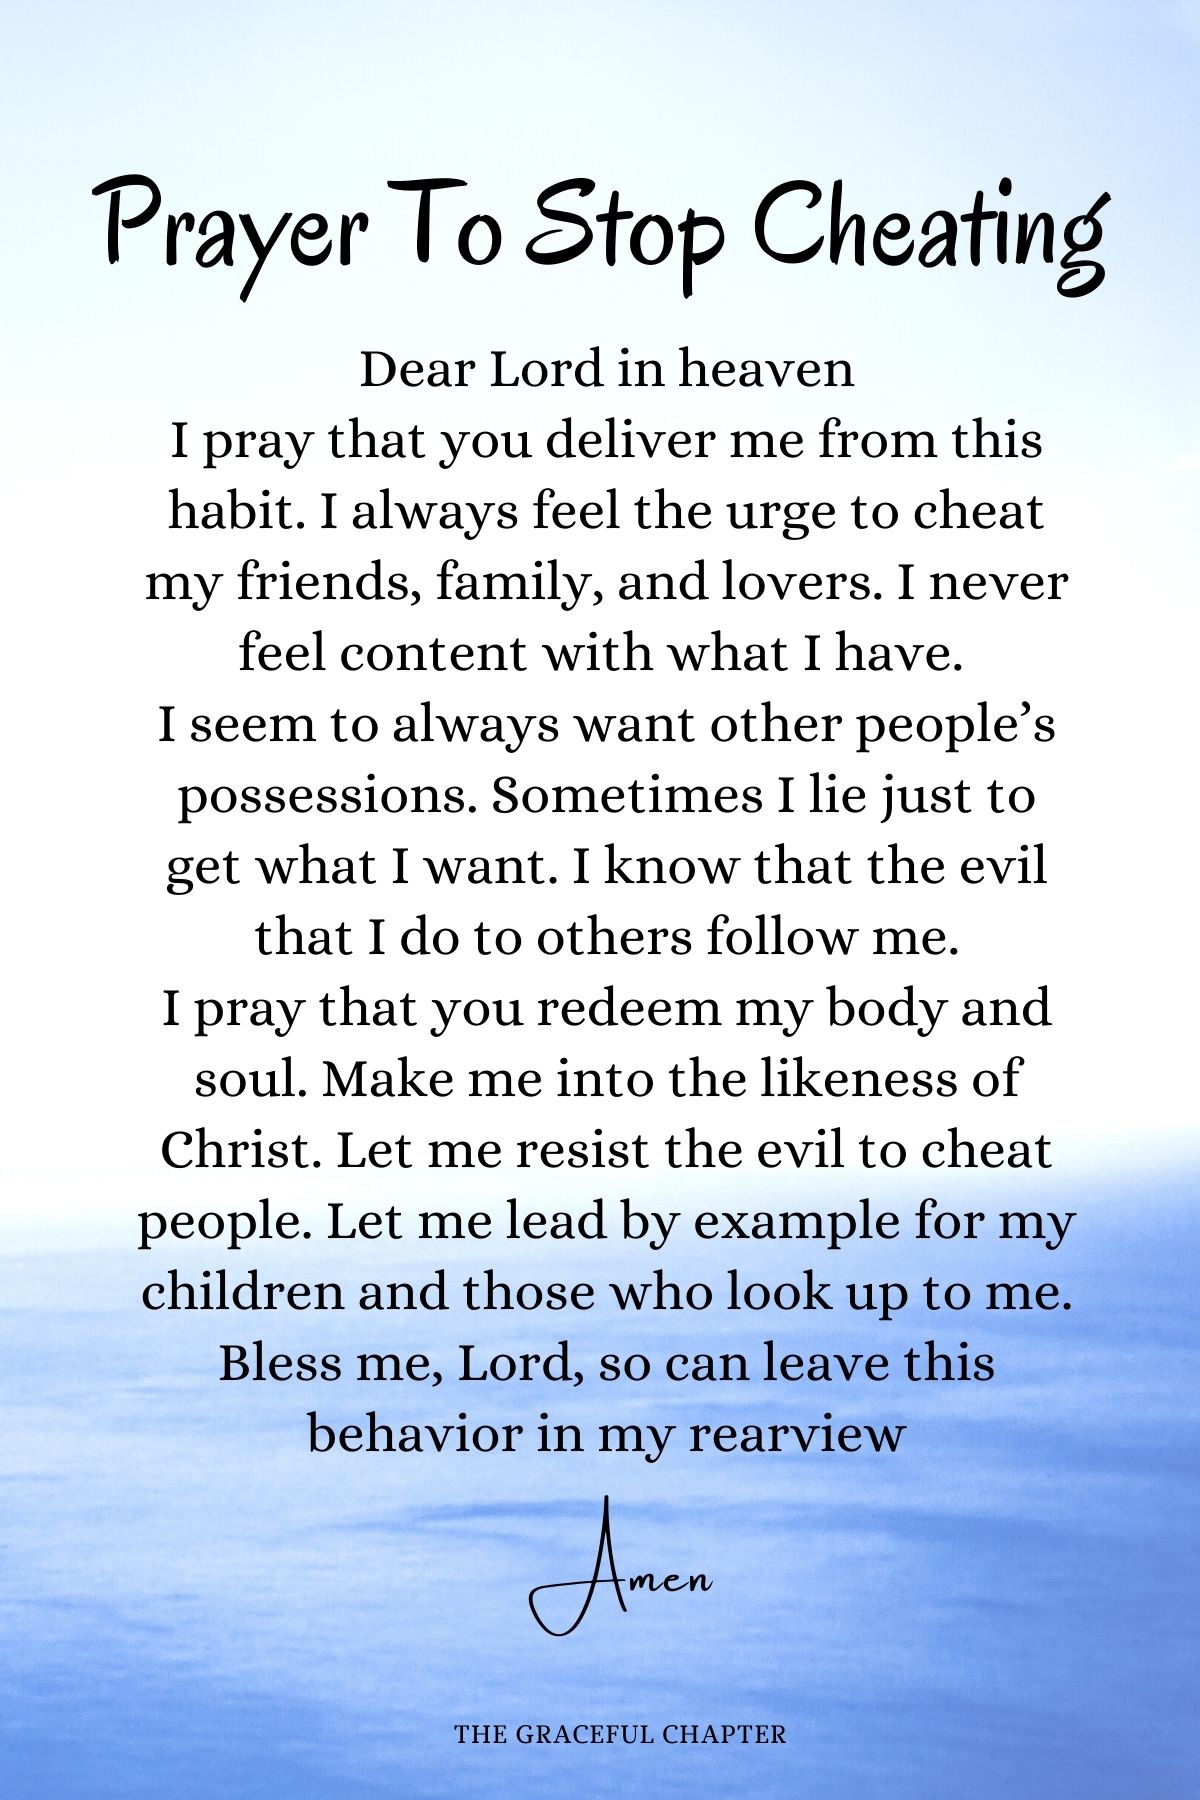 Prayer to stop cheating